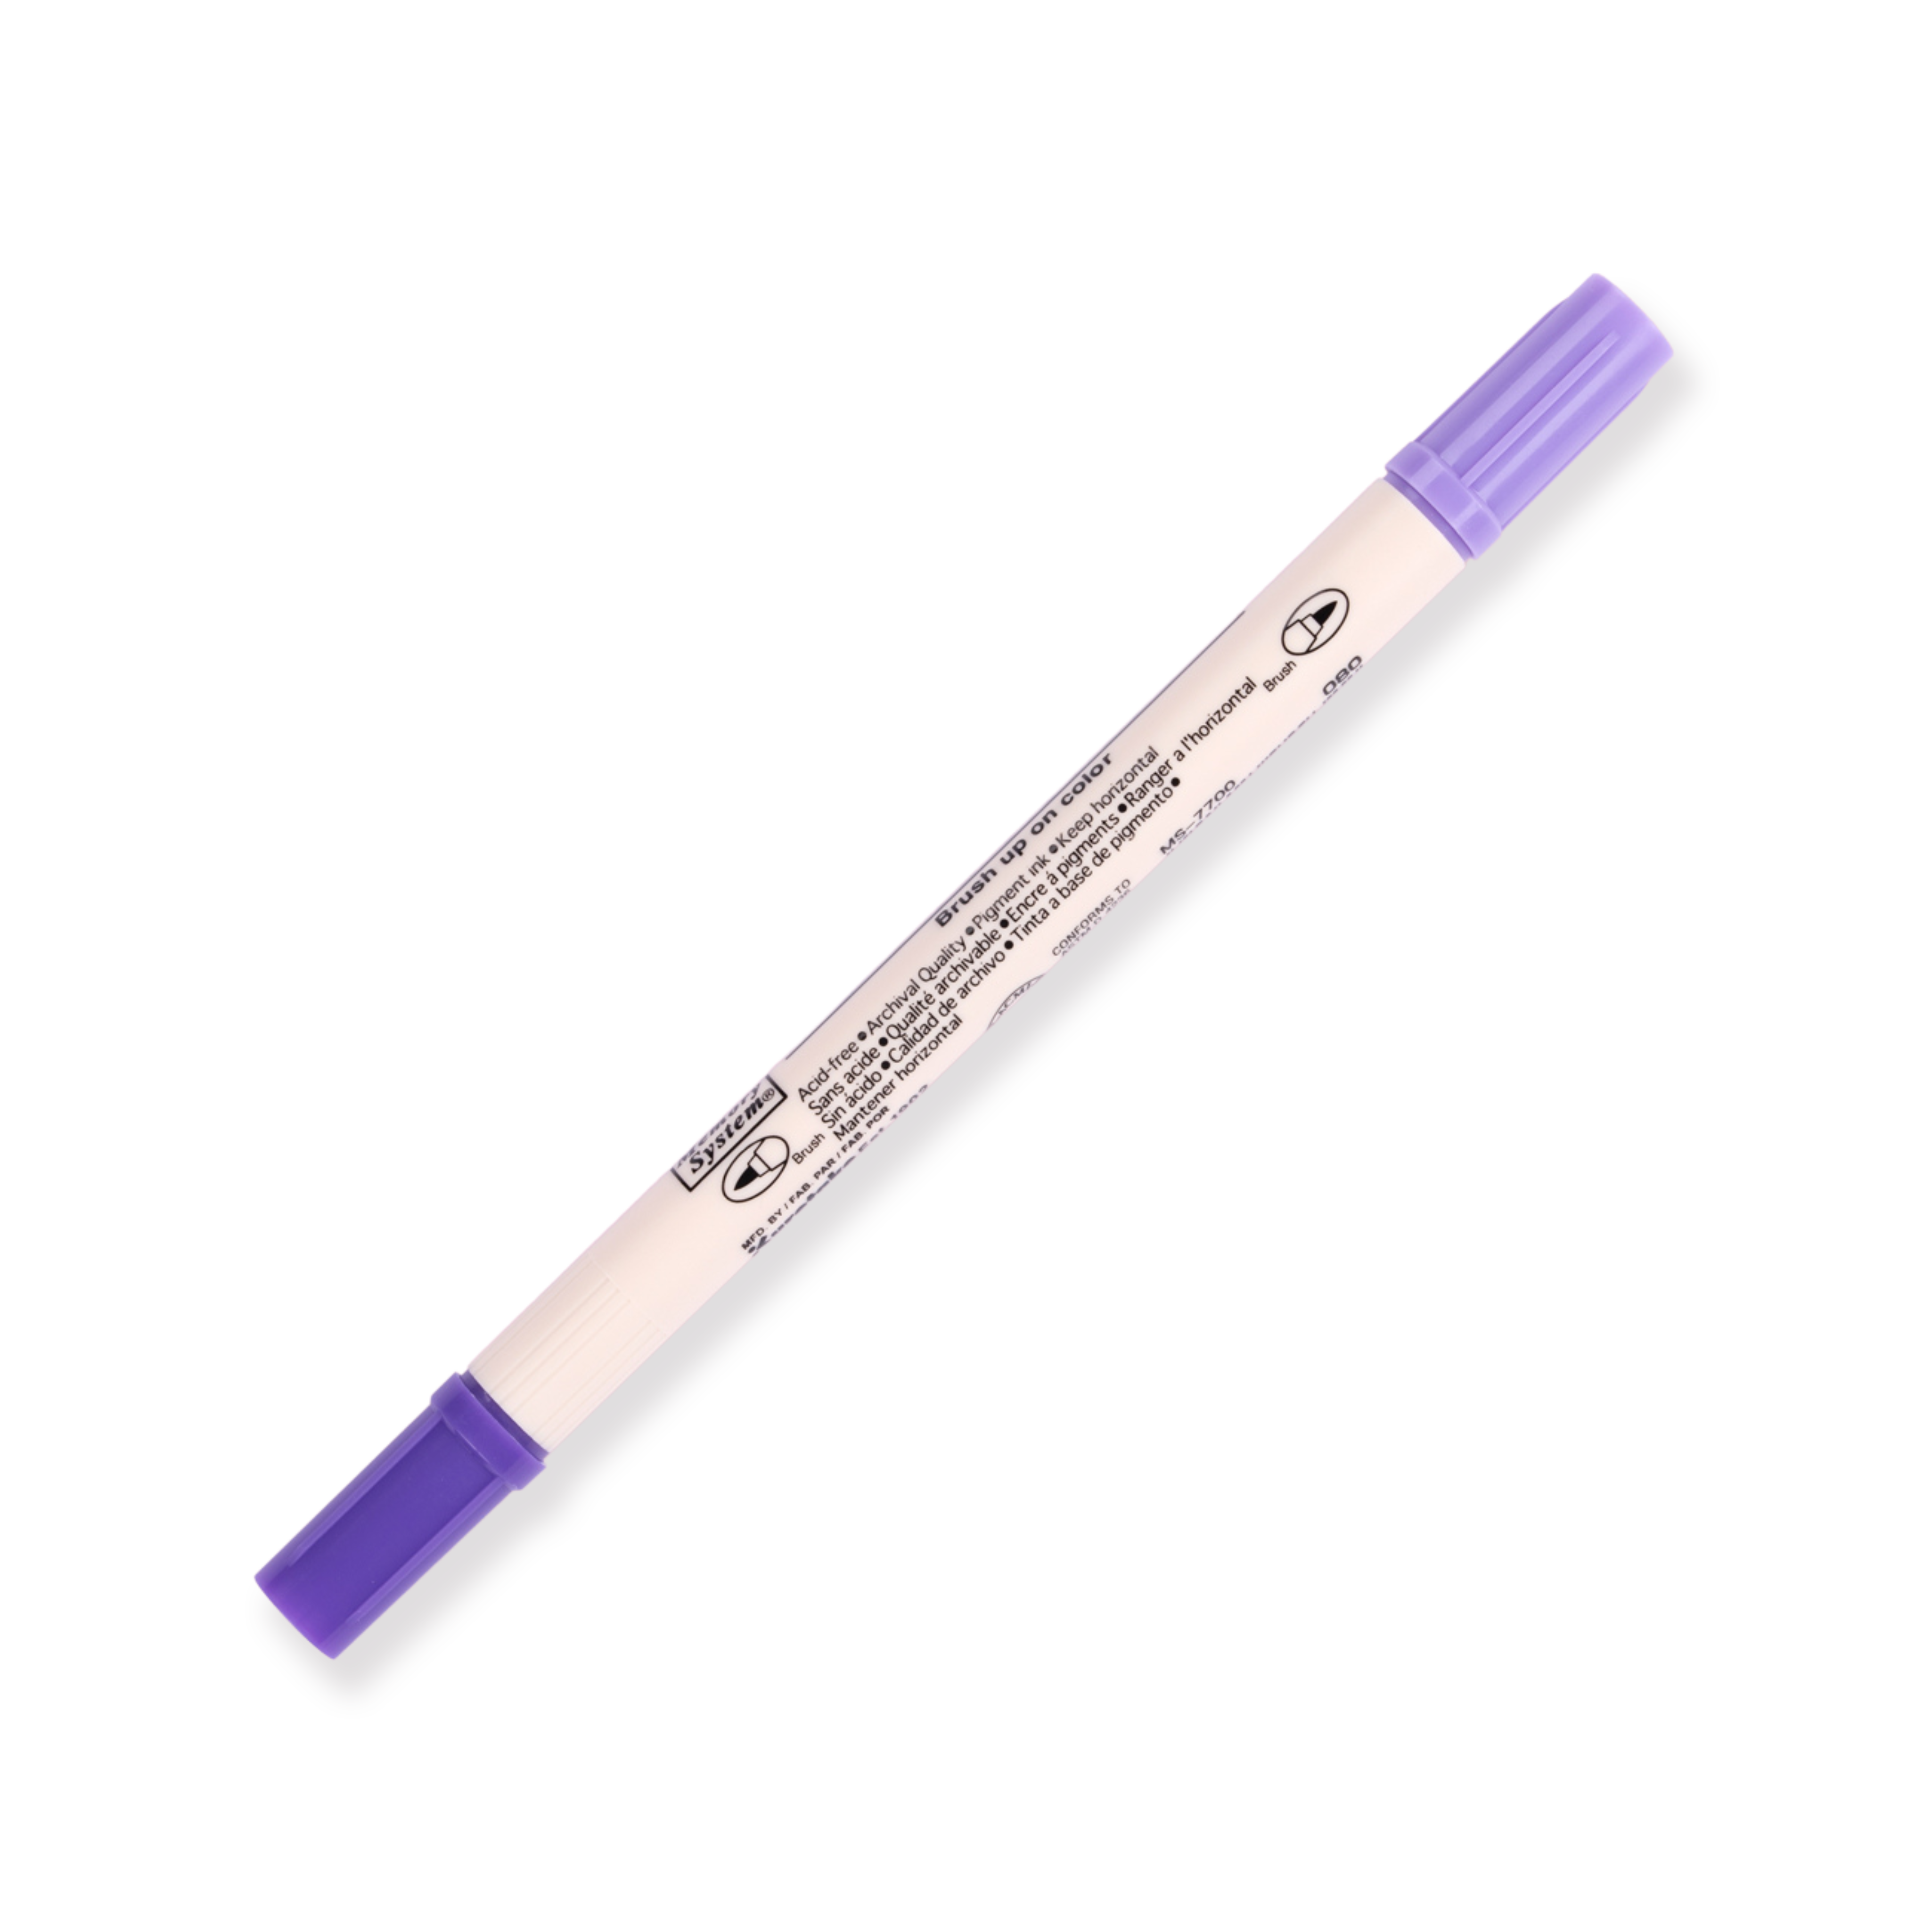 Kuretake Zig Brushables Brush Pen - Violeta puro 080